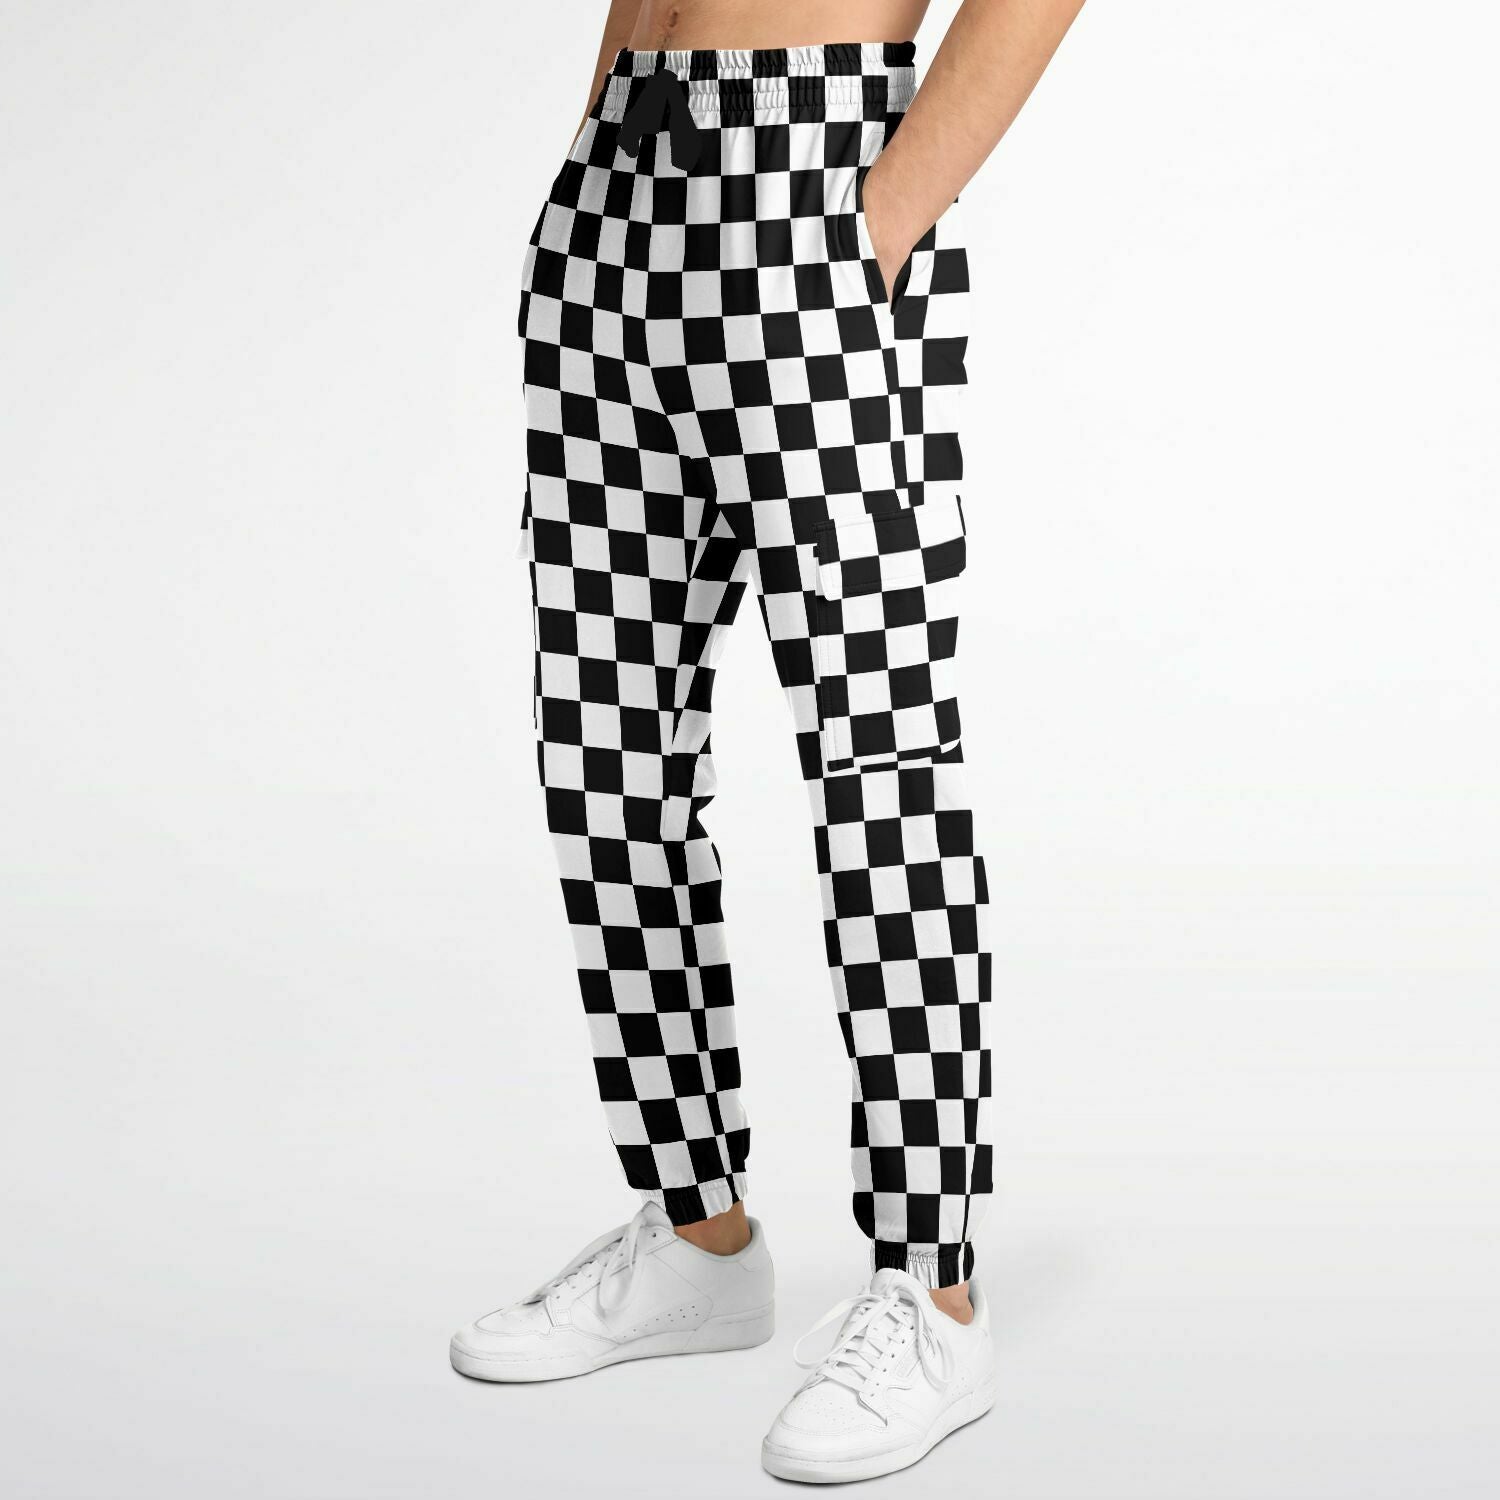 Checkered Cargo Pants with Flap Pockets, Black White Check Women Men Fleece Joggers Sweatpants Cotton Sweats Streetwear Starcove Fashion